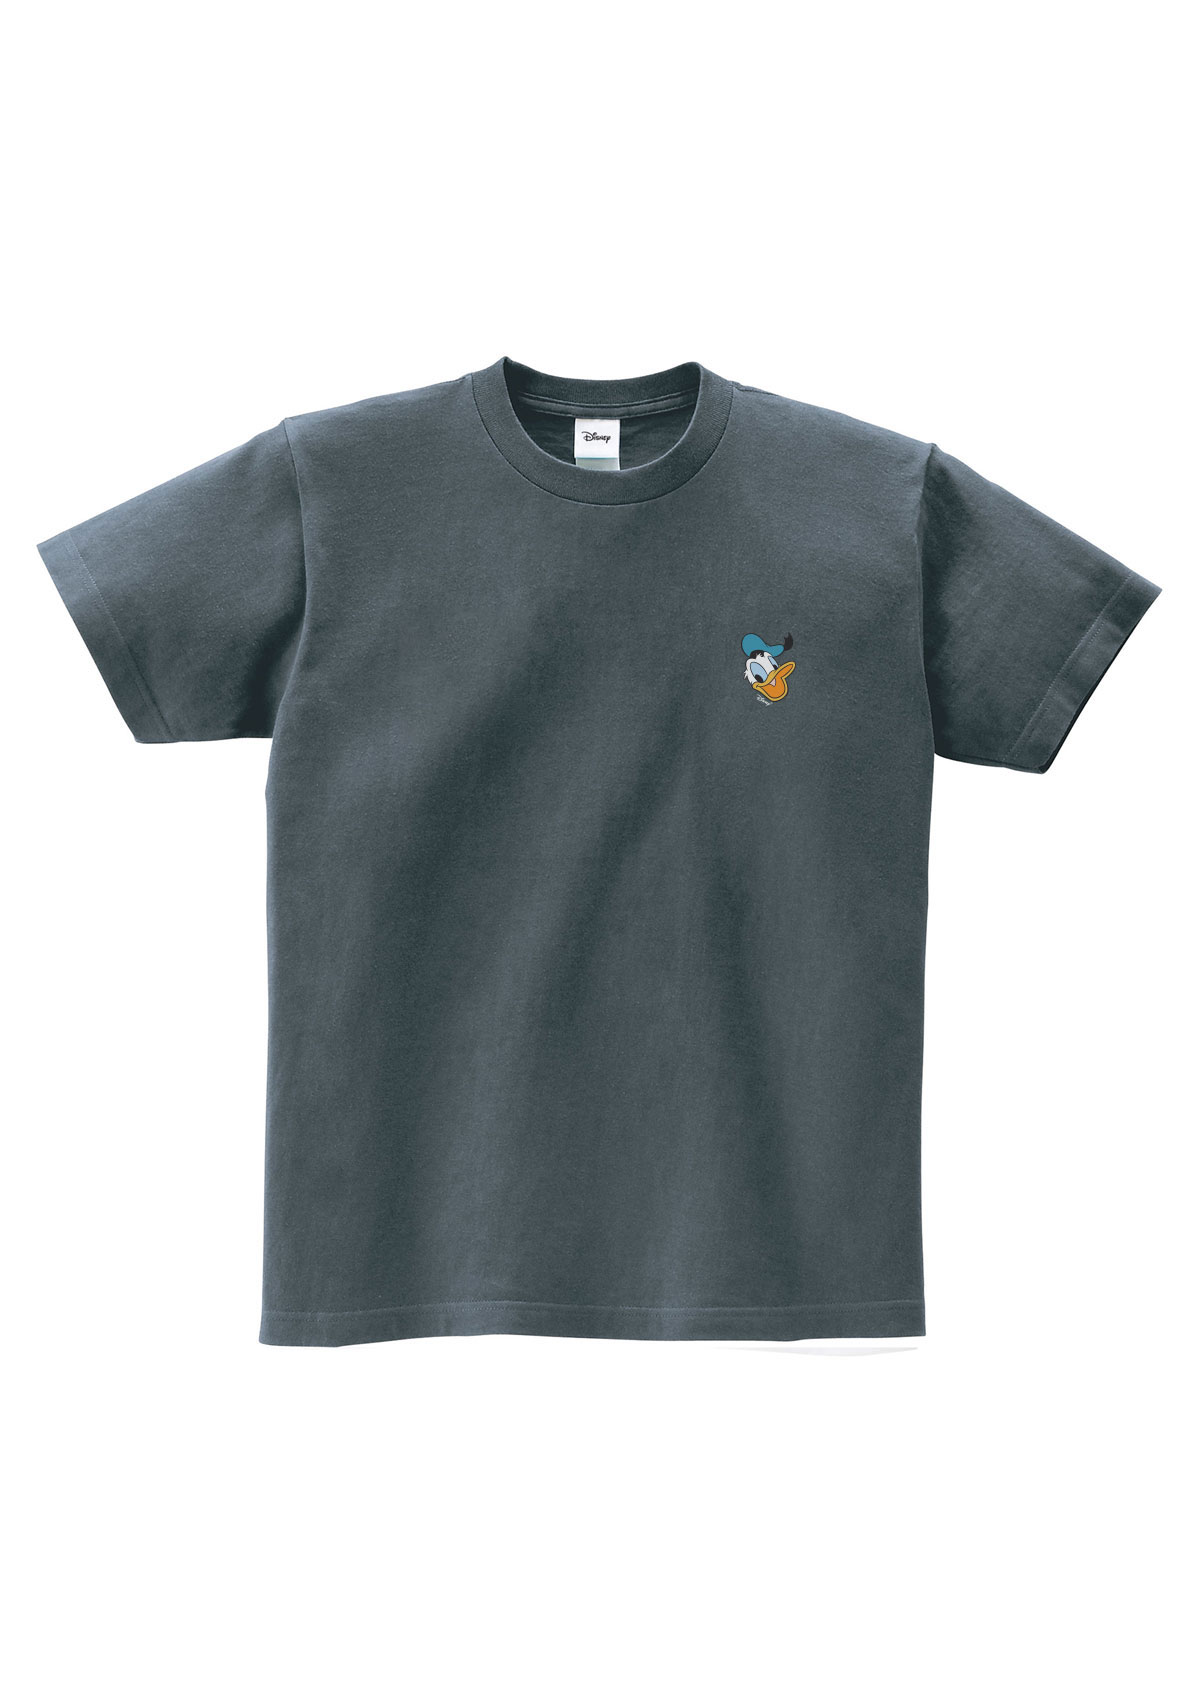 ORI Smile Duck T-Shirt (Charcoal)